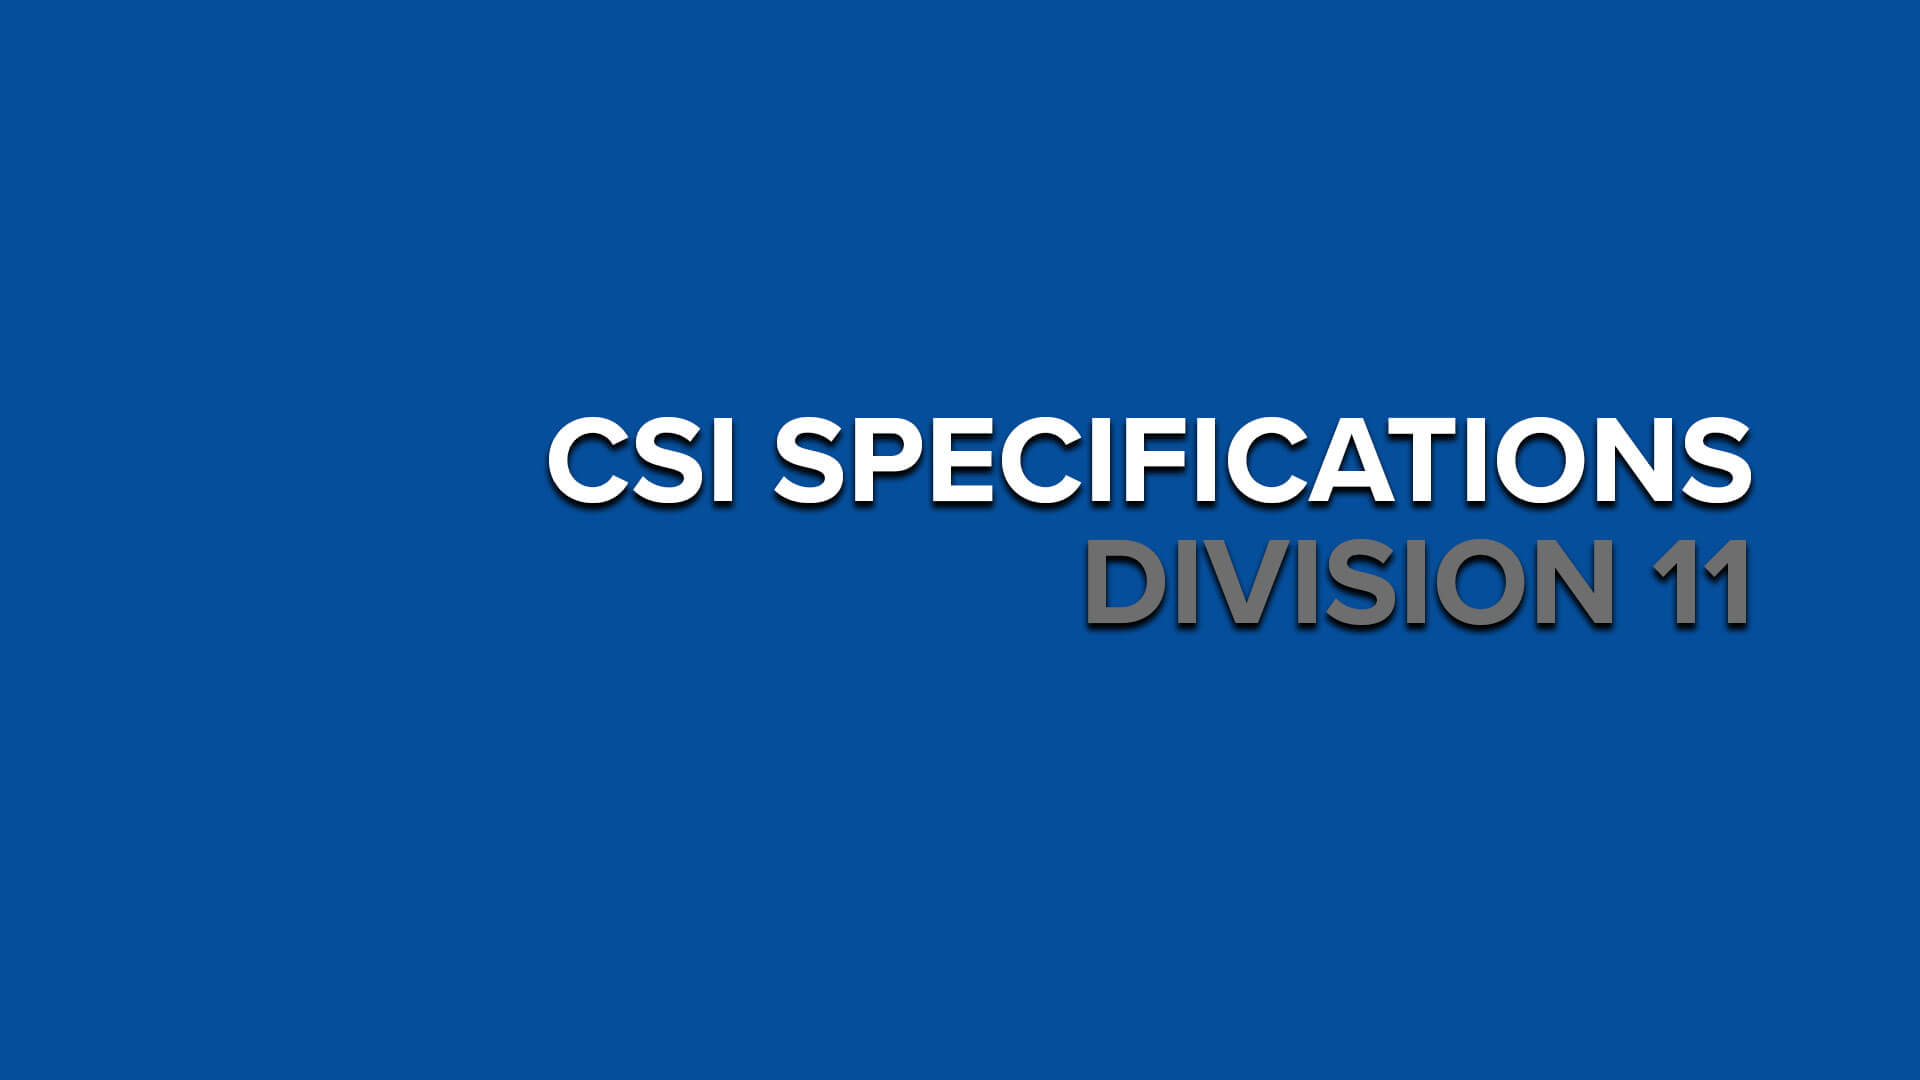 Csi specifications division 11